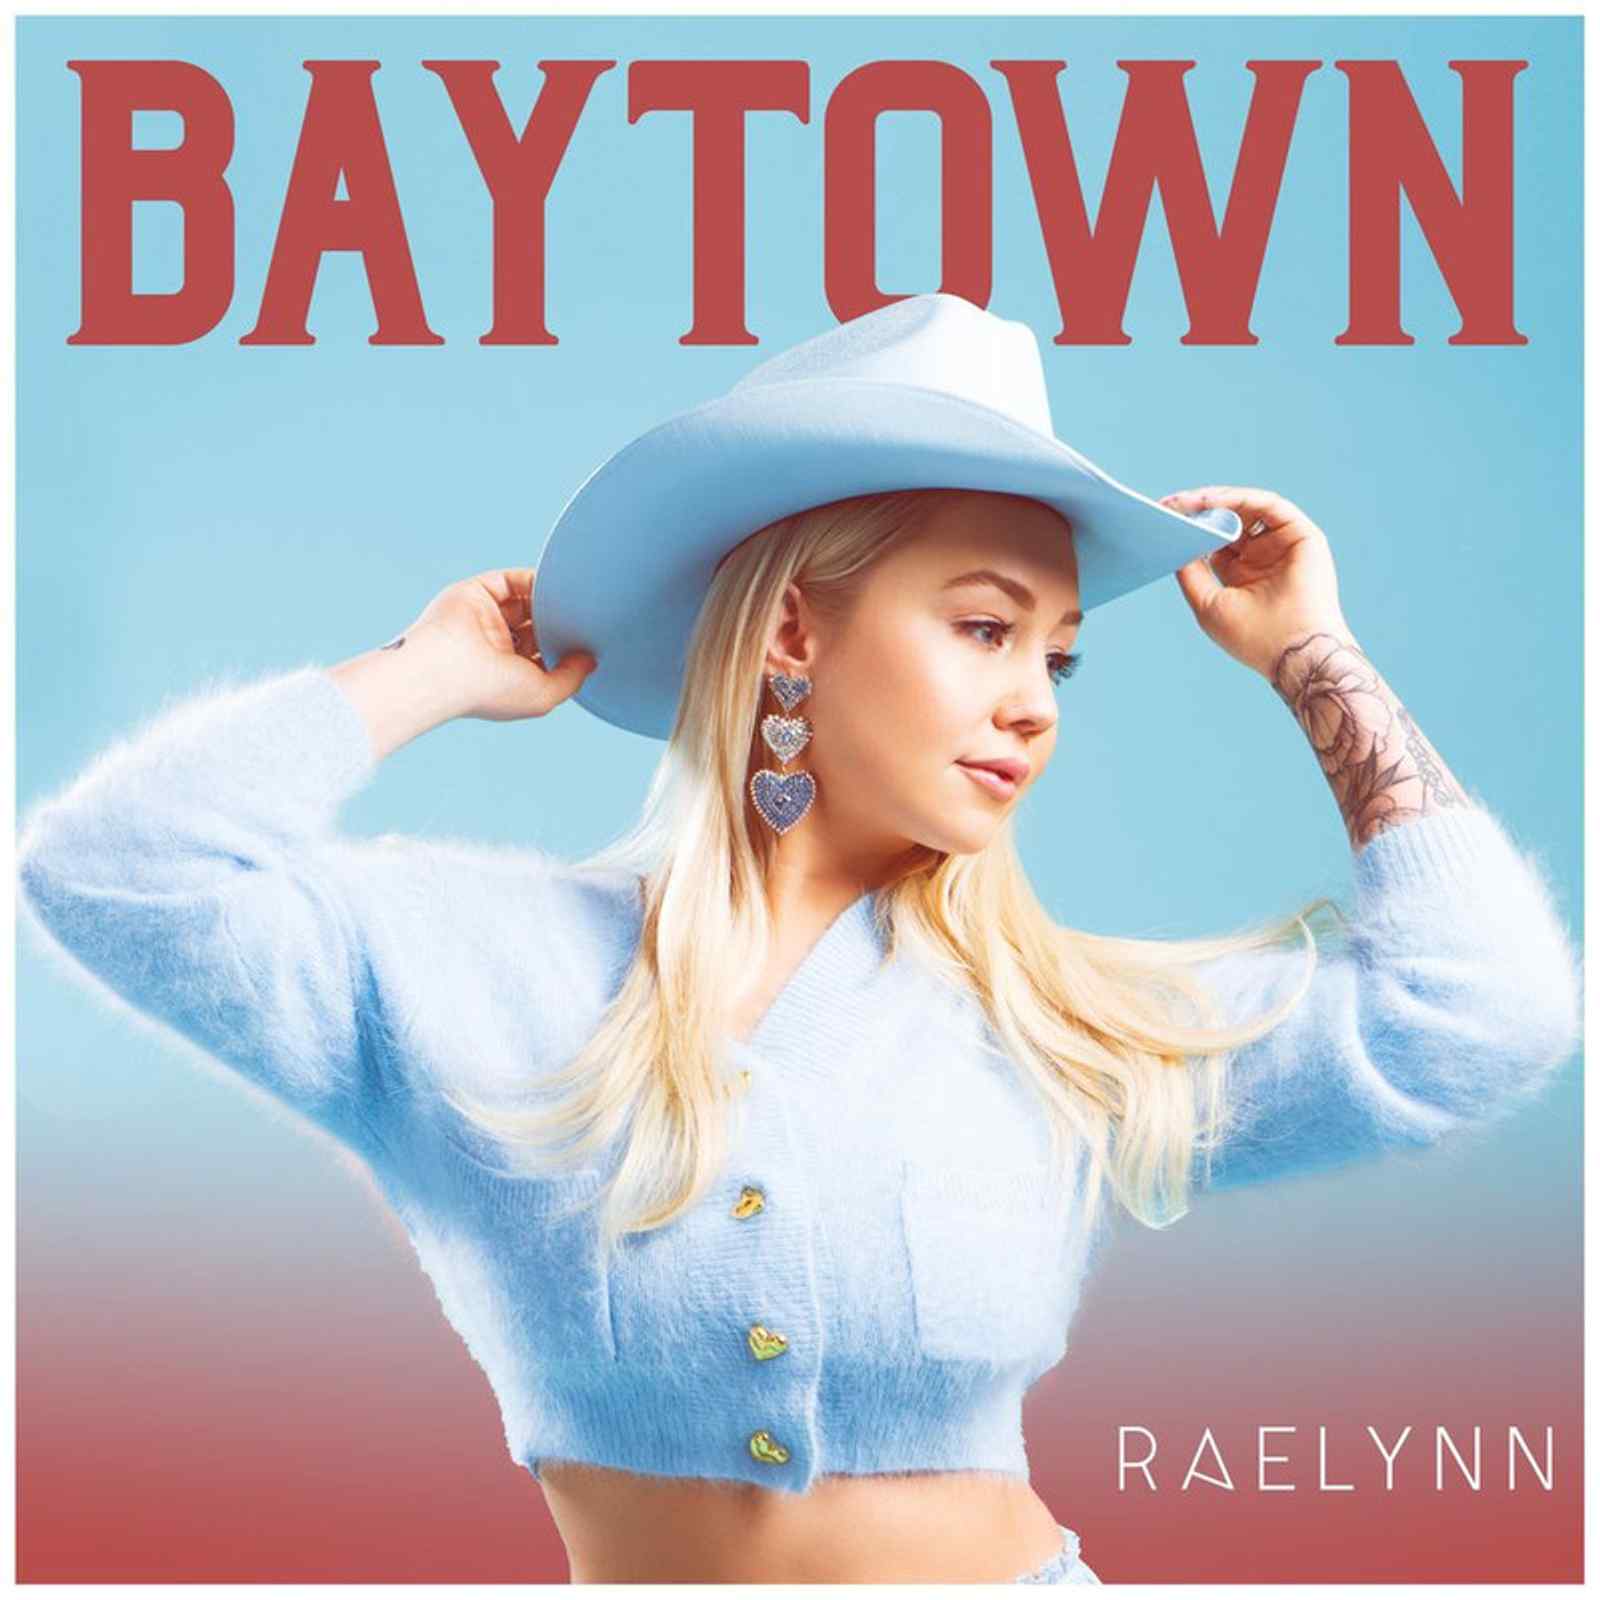 Baytown by RaeLynn